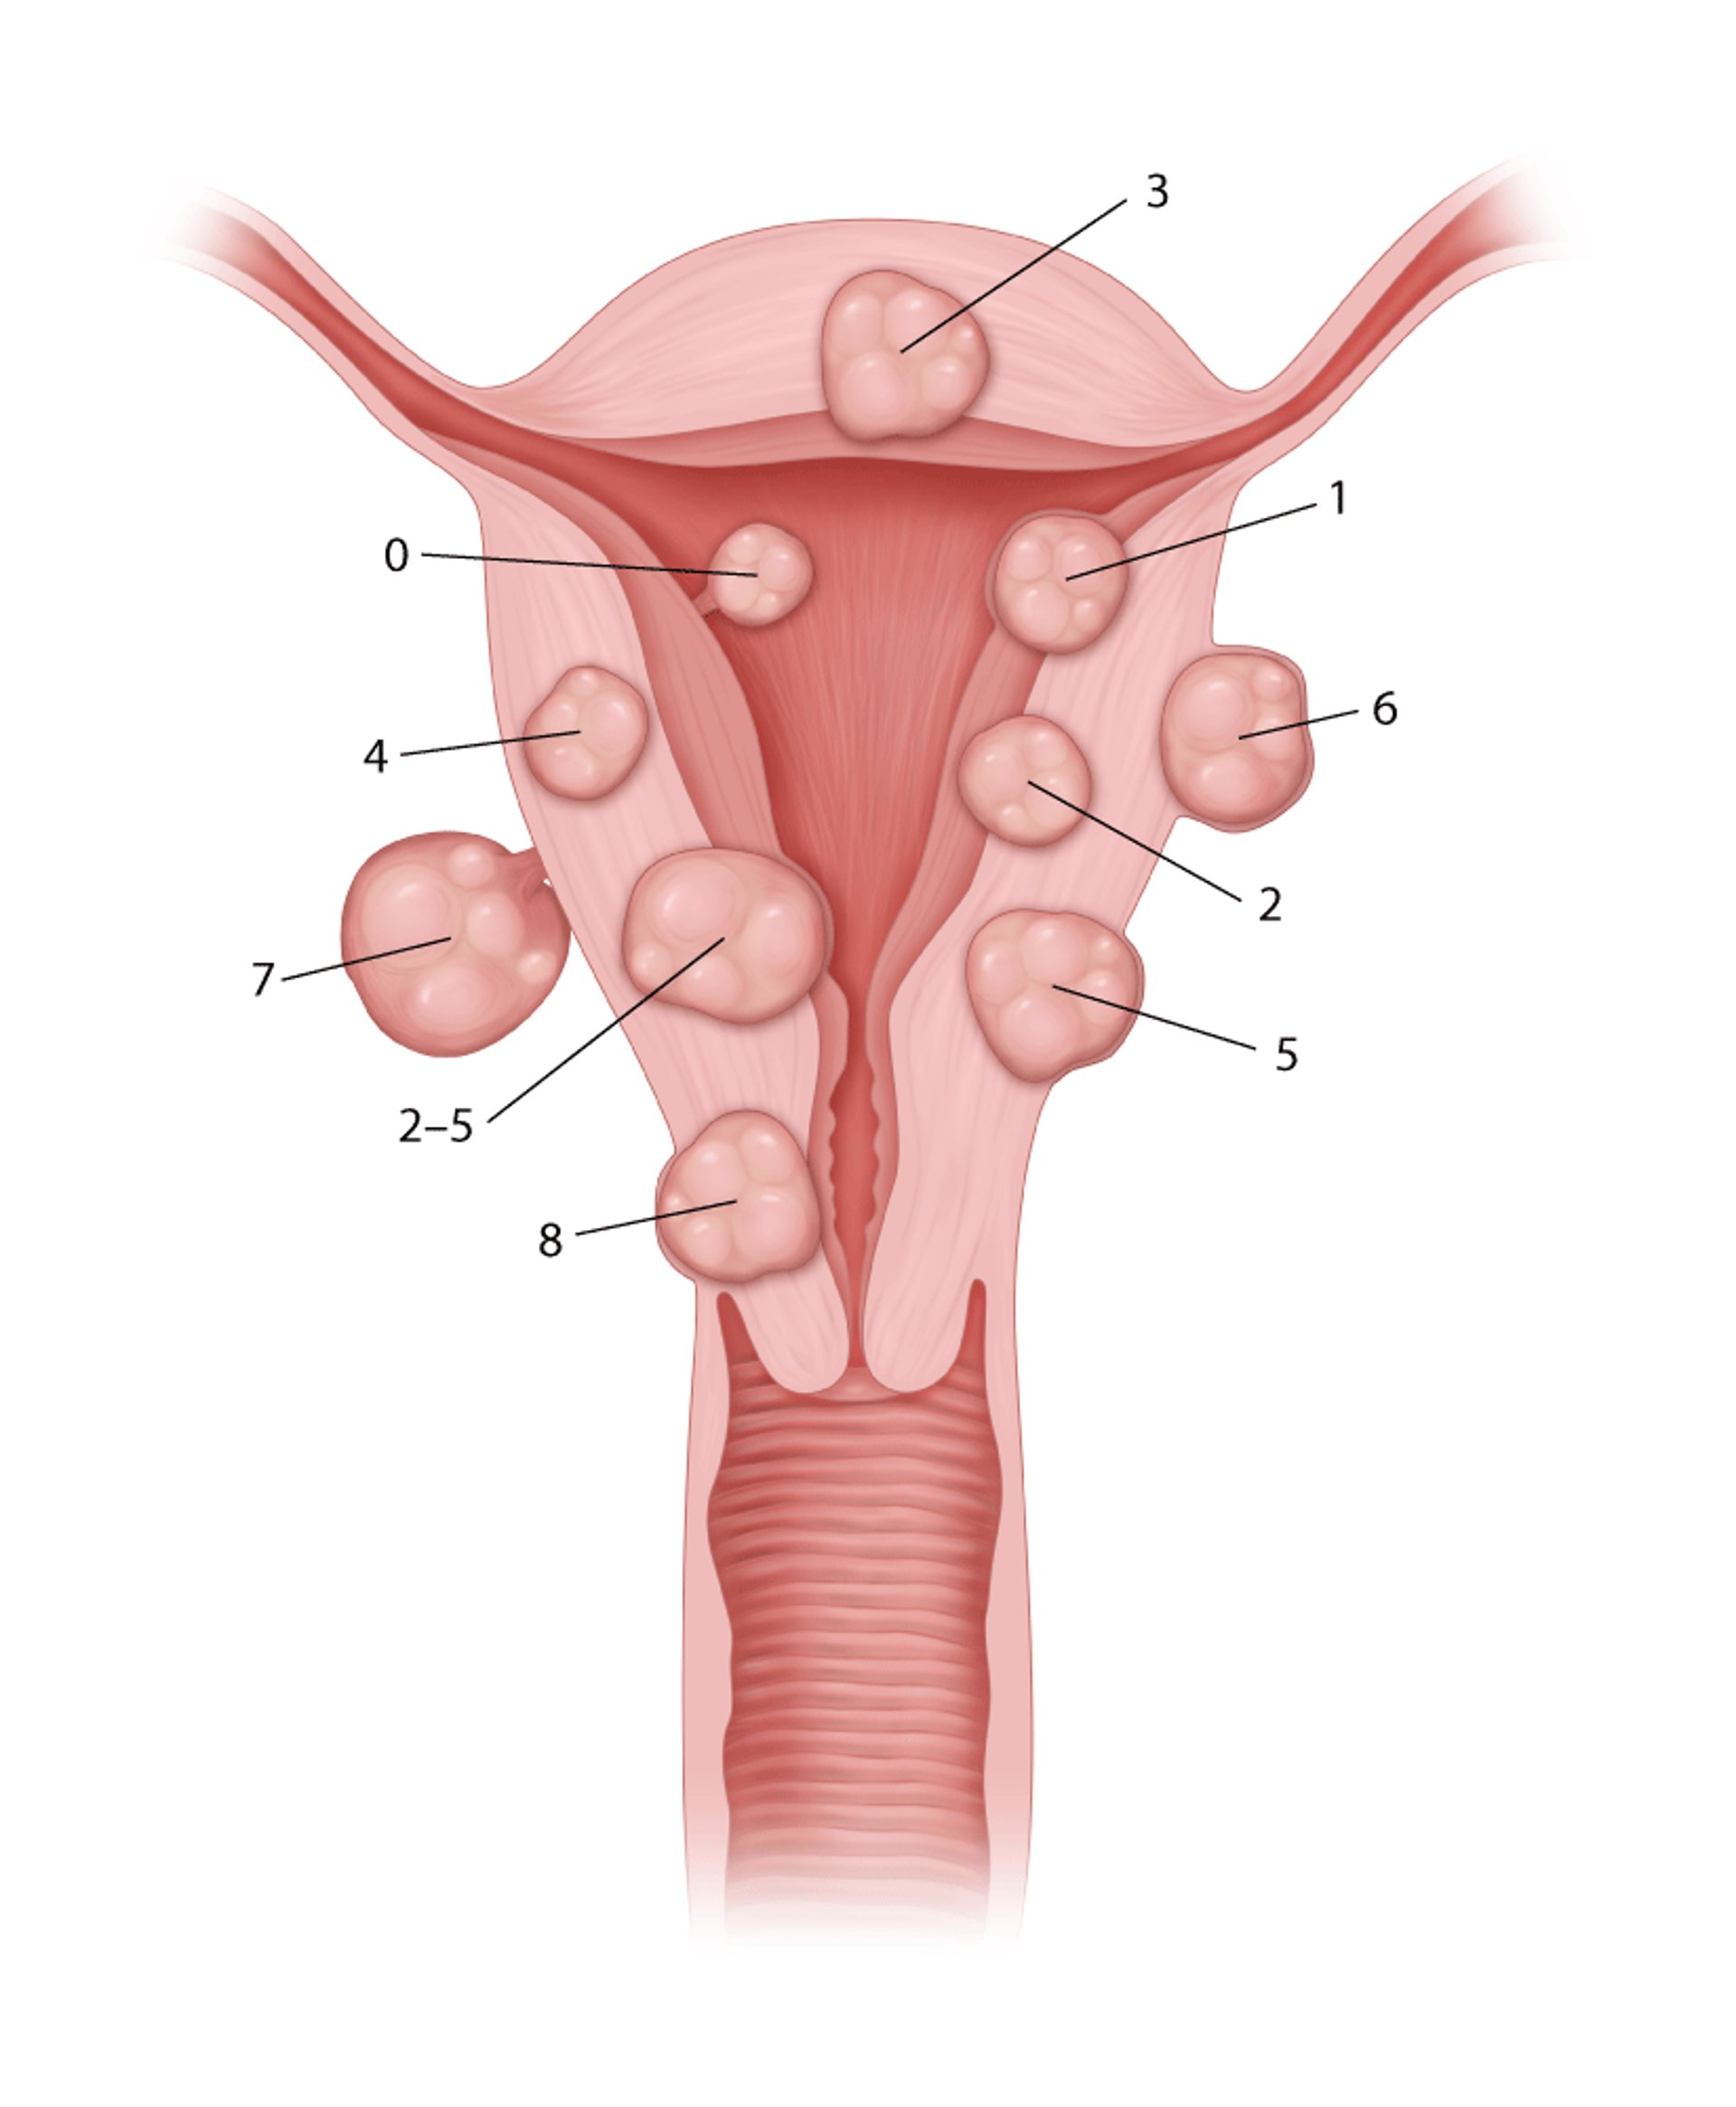 PALM-COEIN* Uterine Leiomyoma (Fibroid) Subclassification System